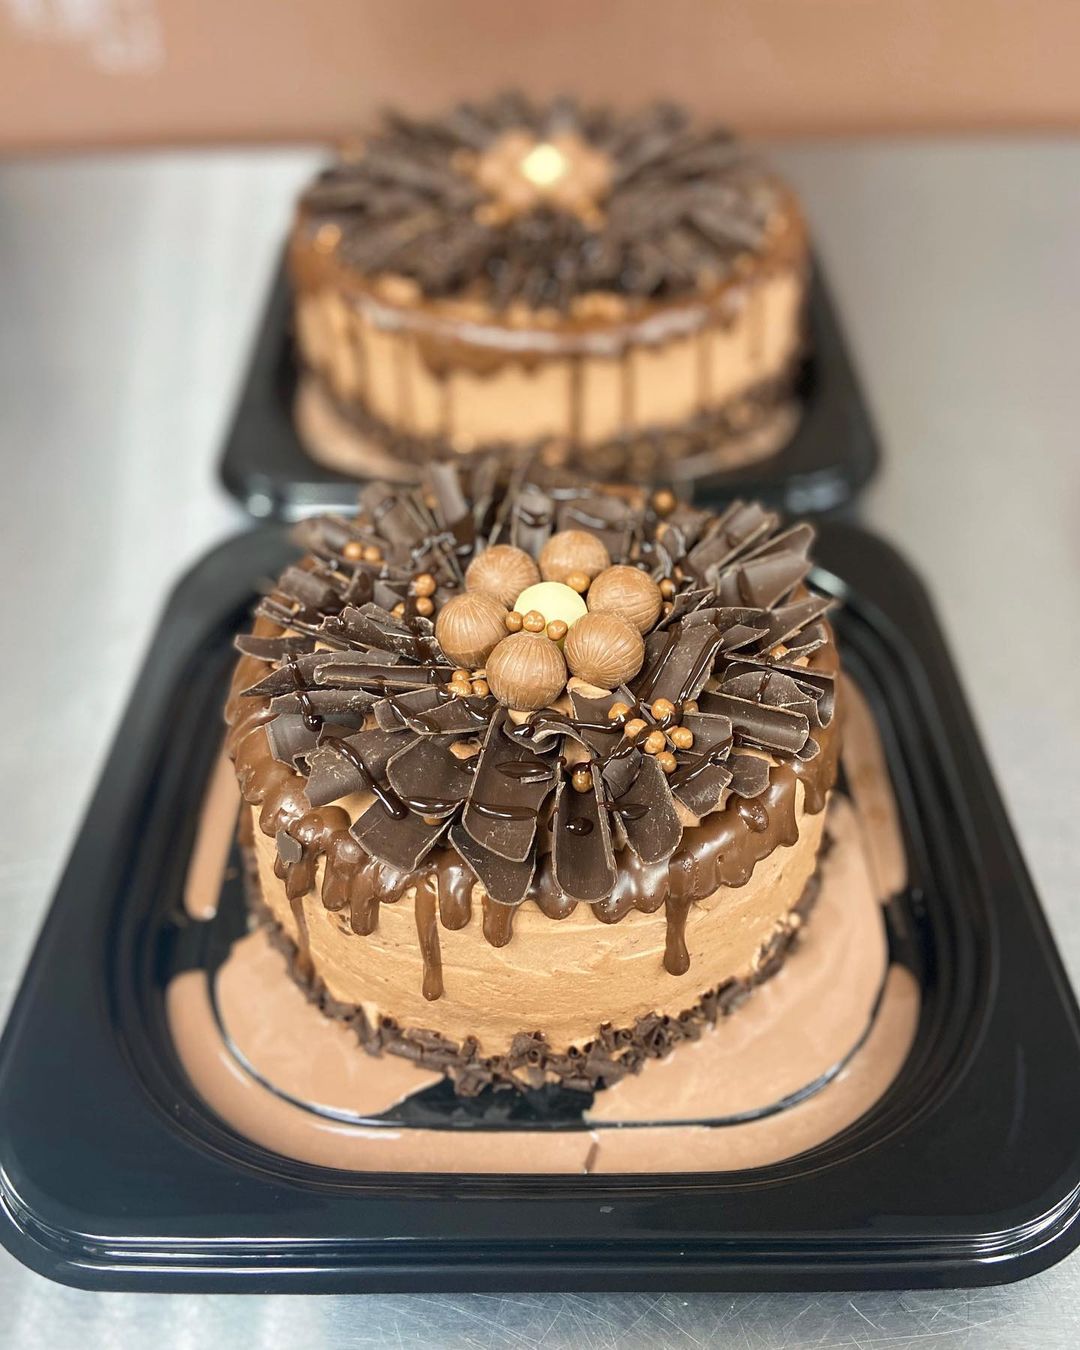 Toronto Cake Lab - #buttercreampaletteknifepainting cake celebrating a mom  and daughter's birthdays. Flavour - Pistachio-mascarpone filling  #buttercreampaletteknifepainting #buttercreamcakes #paletteknifeflowers  #gtacustomcakes #durhamcustomcakes ...